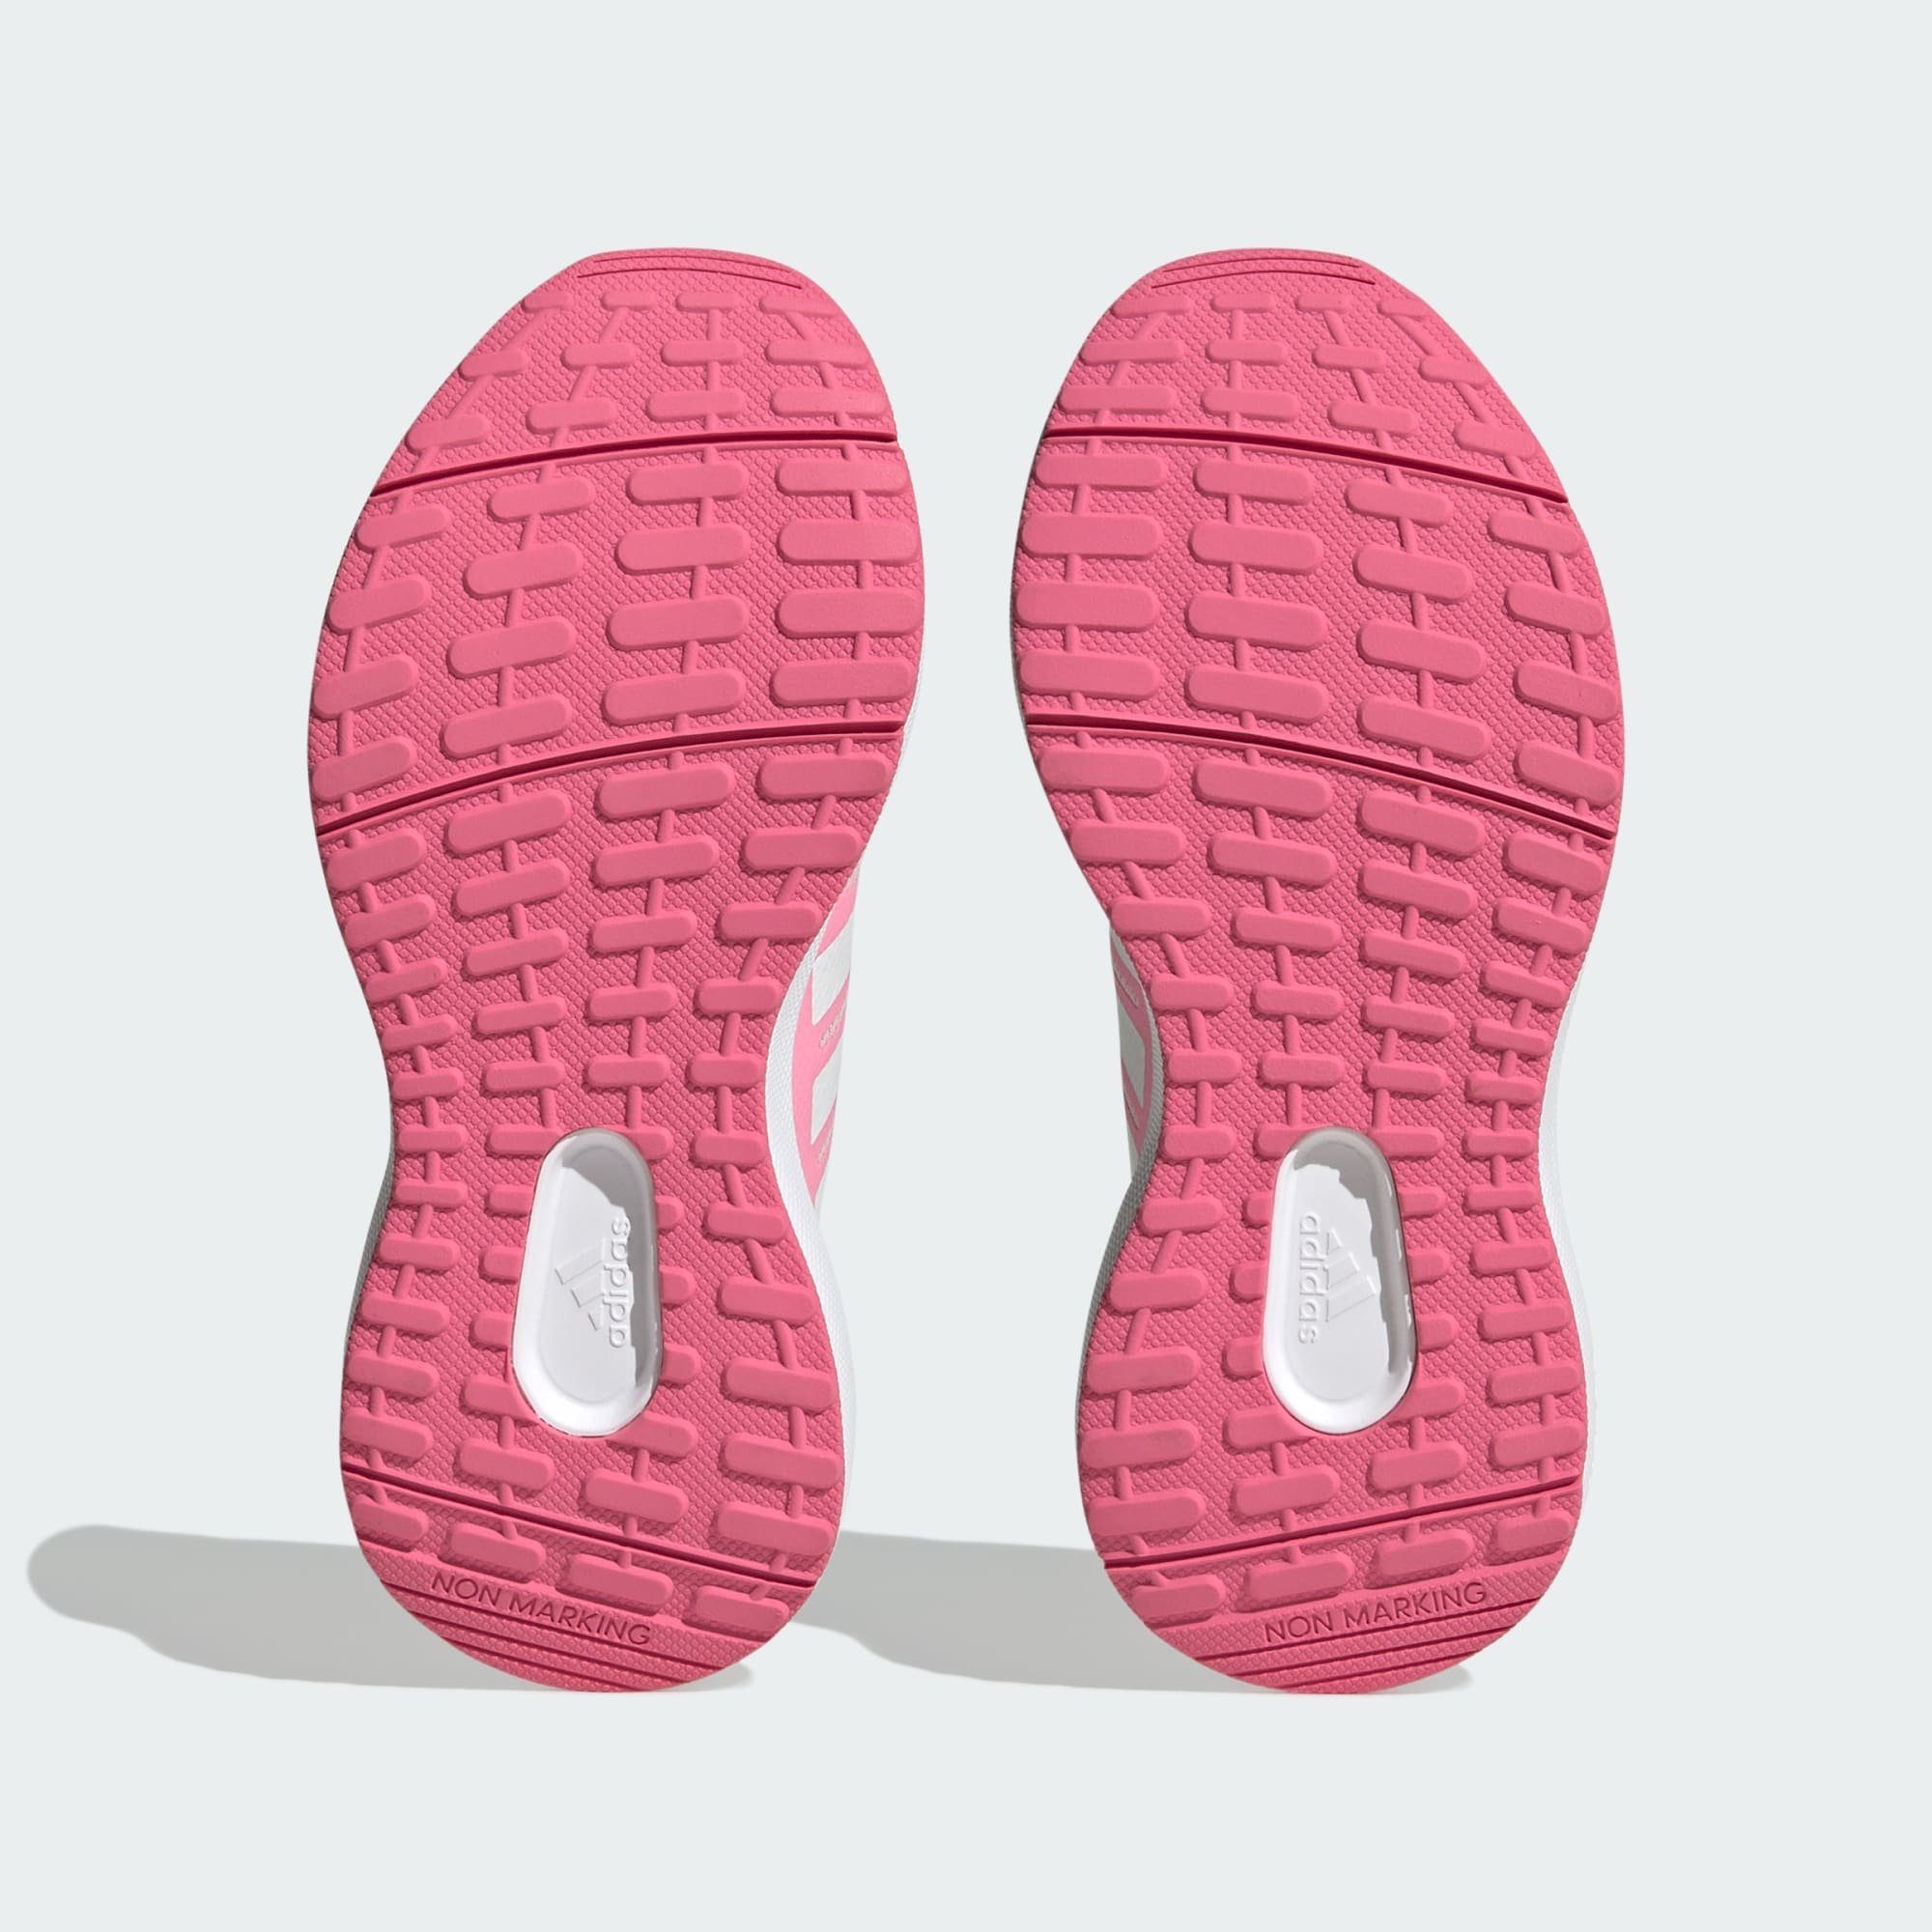 / Clear LACE FORTARUN adidas White 2.0 Pink / CLOUDFOAM Pink Sneaker SCHUH Cloud Bliss Sportswear